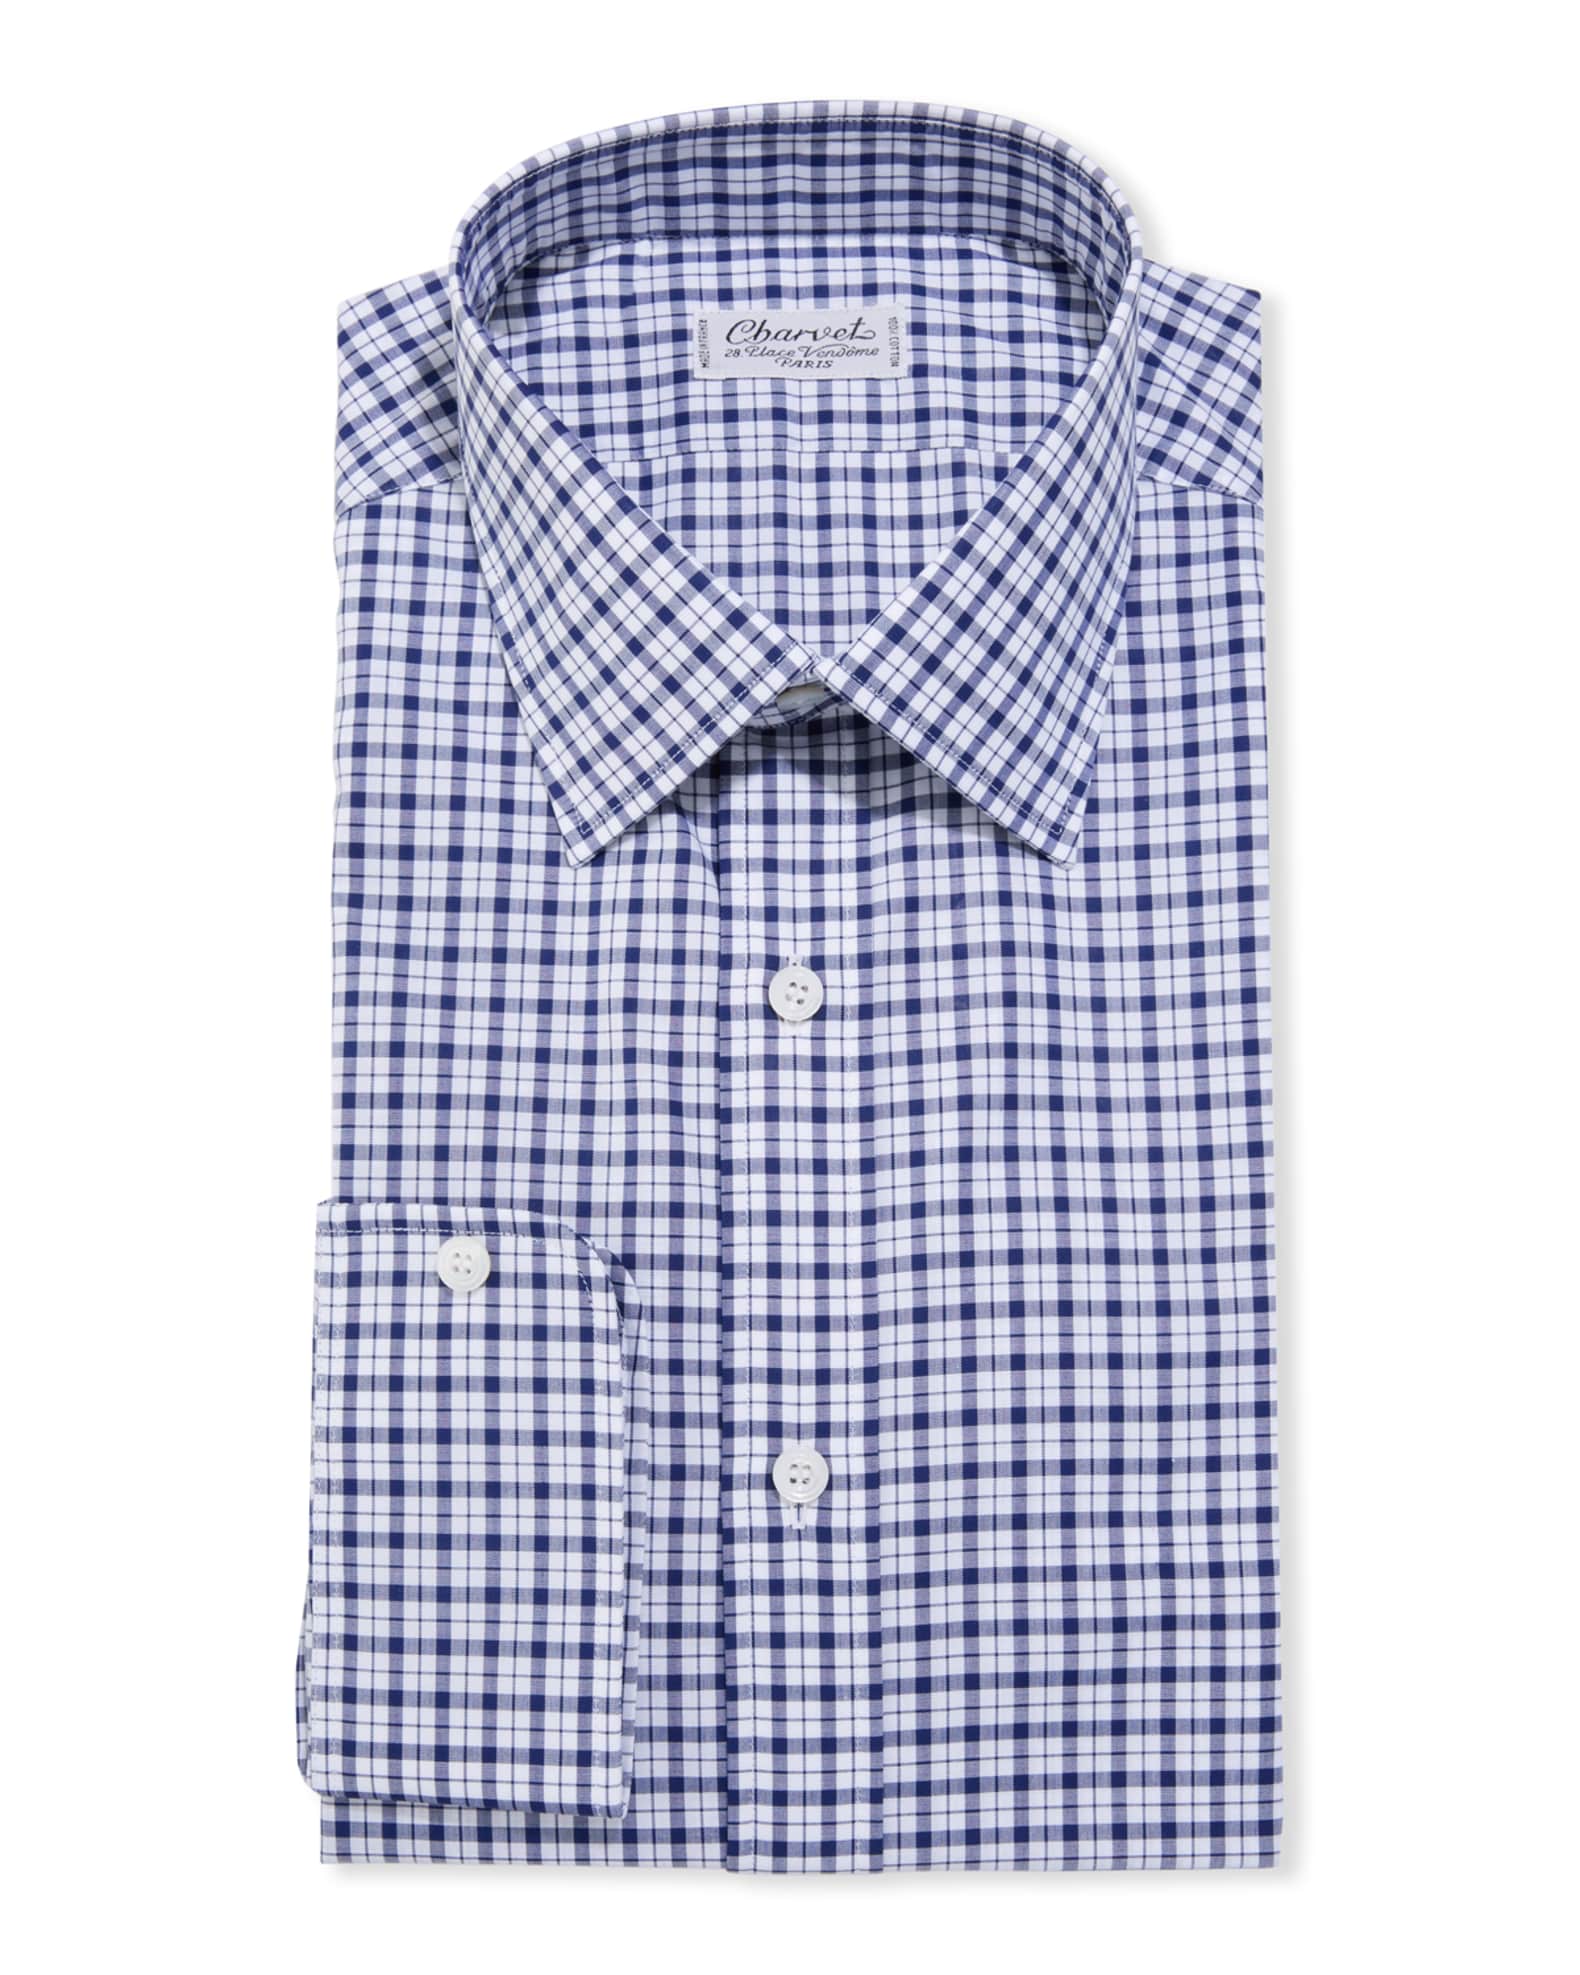 Charvet Men's Check Dress Shirt | Neiman Marcus